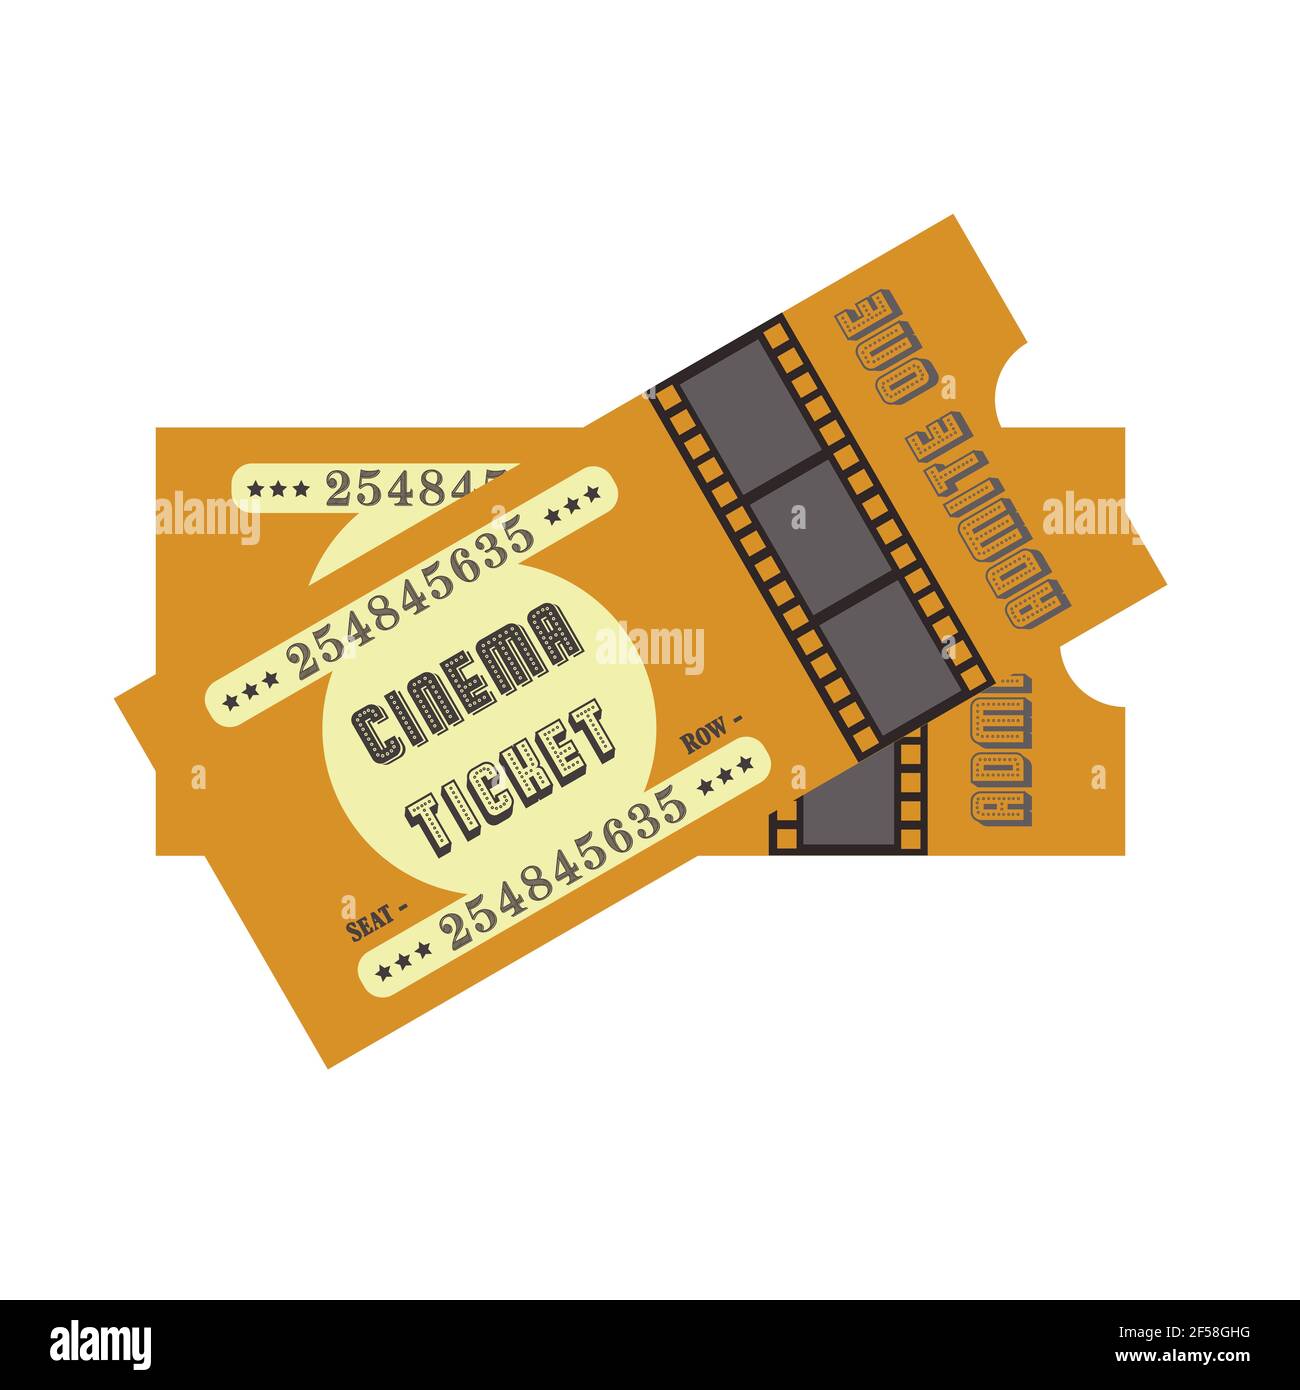 Vintage cinema or movie ticket template with cine-film on yellow background. Ticket retro design movie illustration. Stock Photo